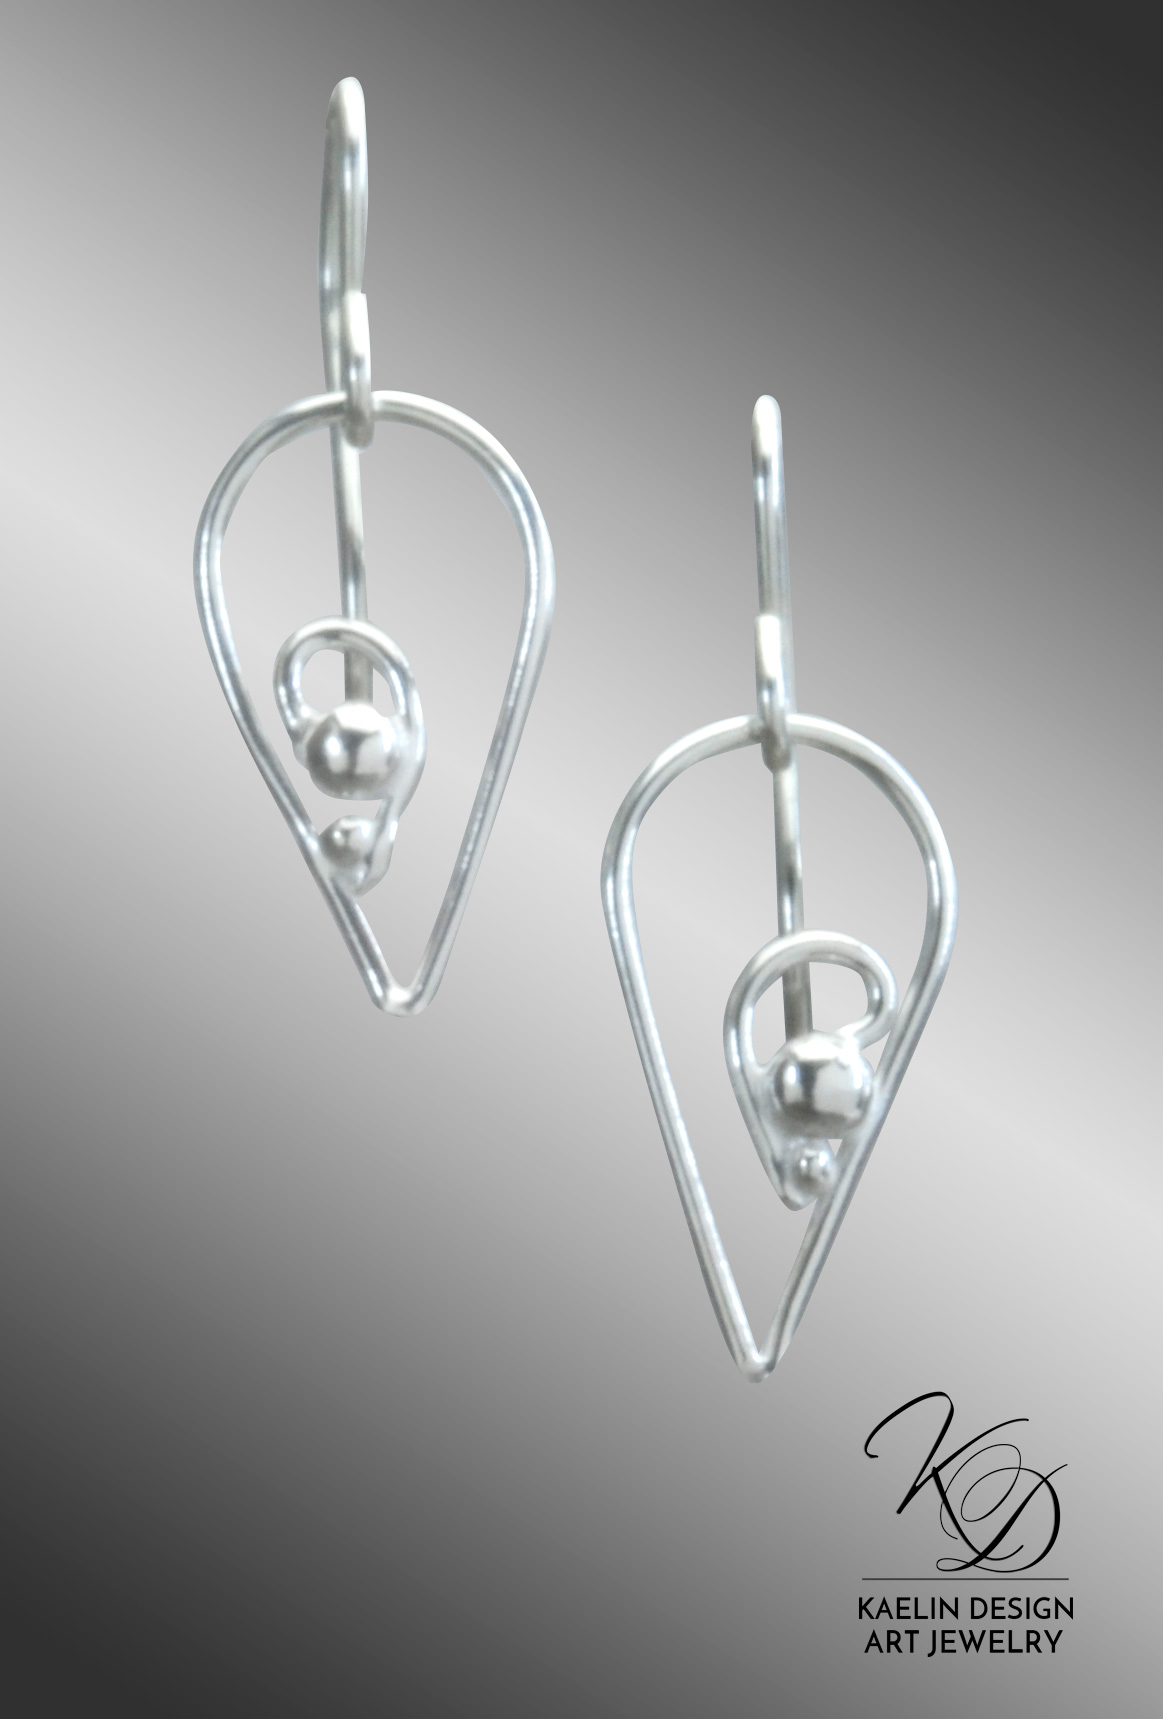 Ripple Waters Hand Forged Sterling Silver Earrings by Kaelin Design Fine Art Jewelry